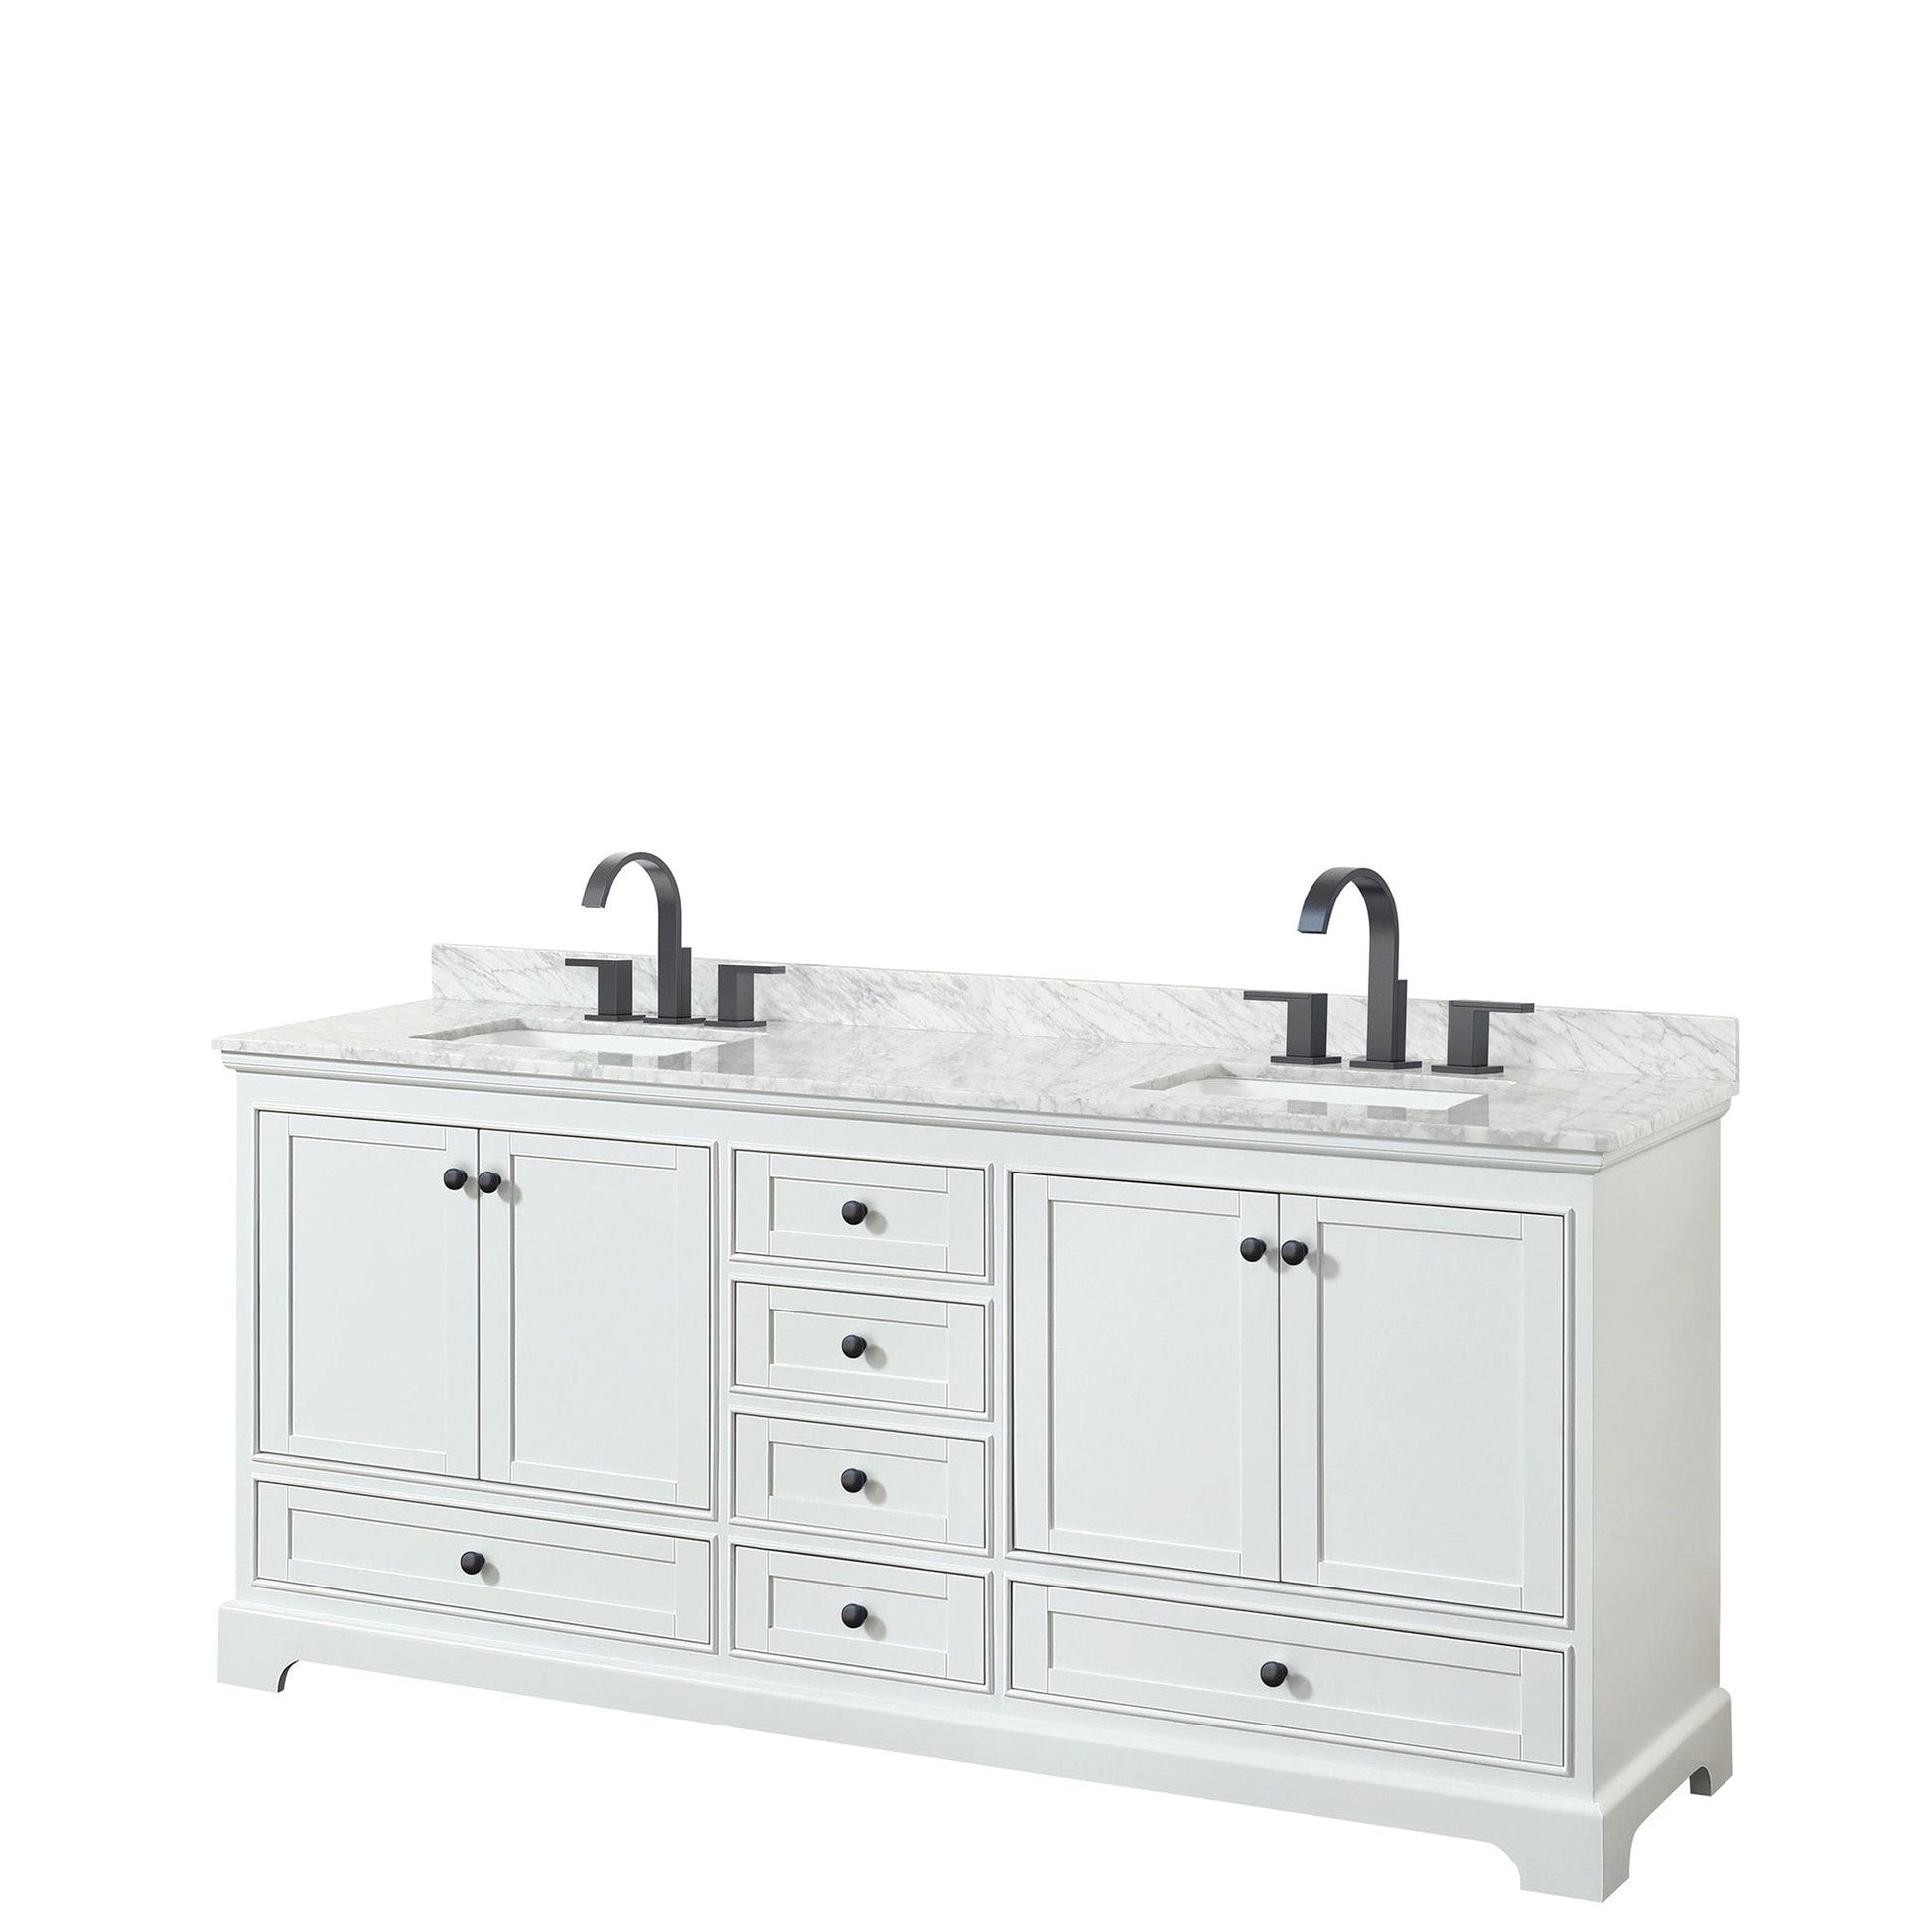 Deborah 80" Double Bathroom Vanity in White, White Carrara Marble Countertop, Undermount Square Sinks, Matte Black Trim